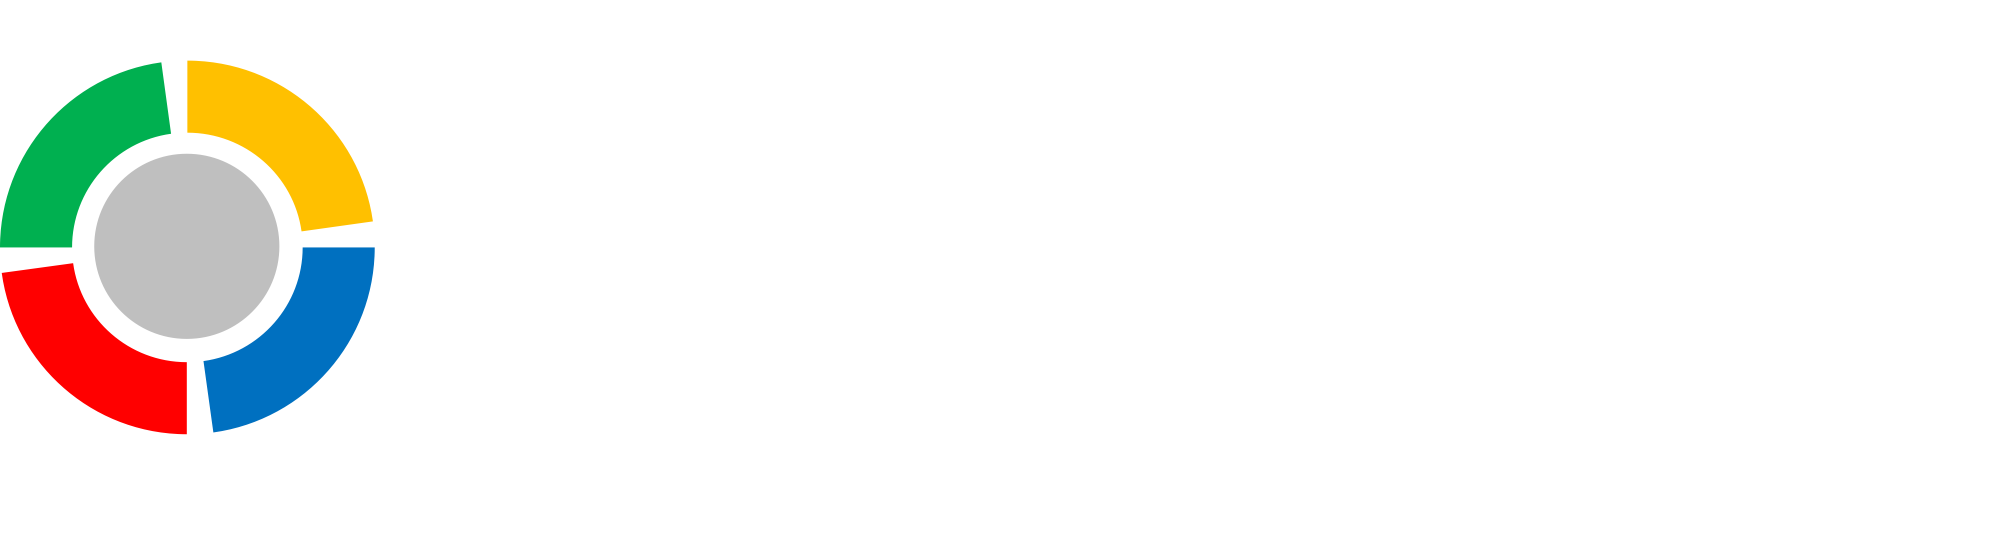 Fifth Quadrant Performance